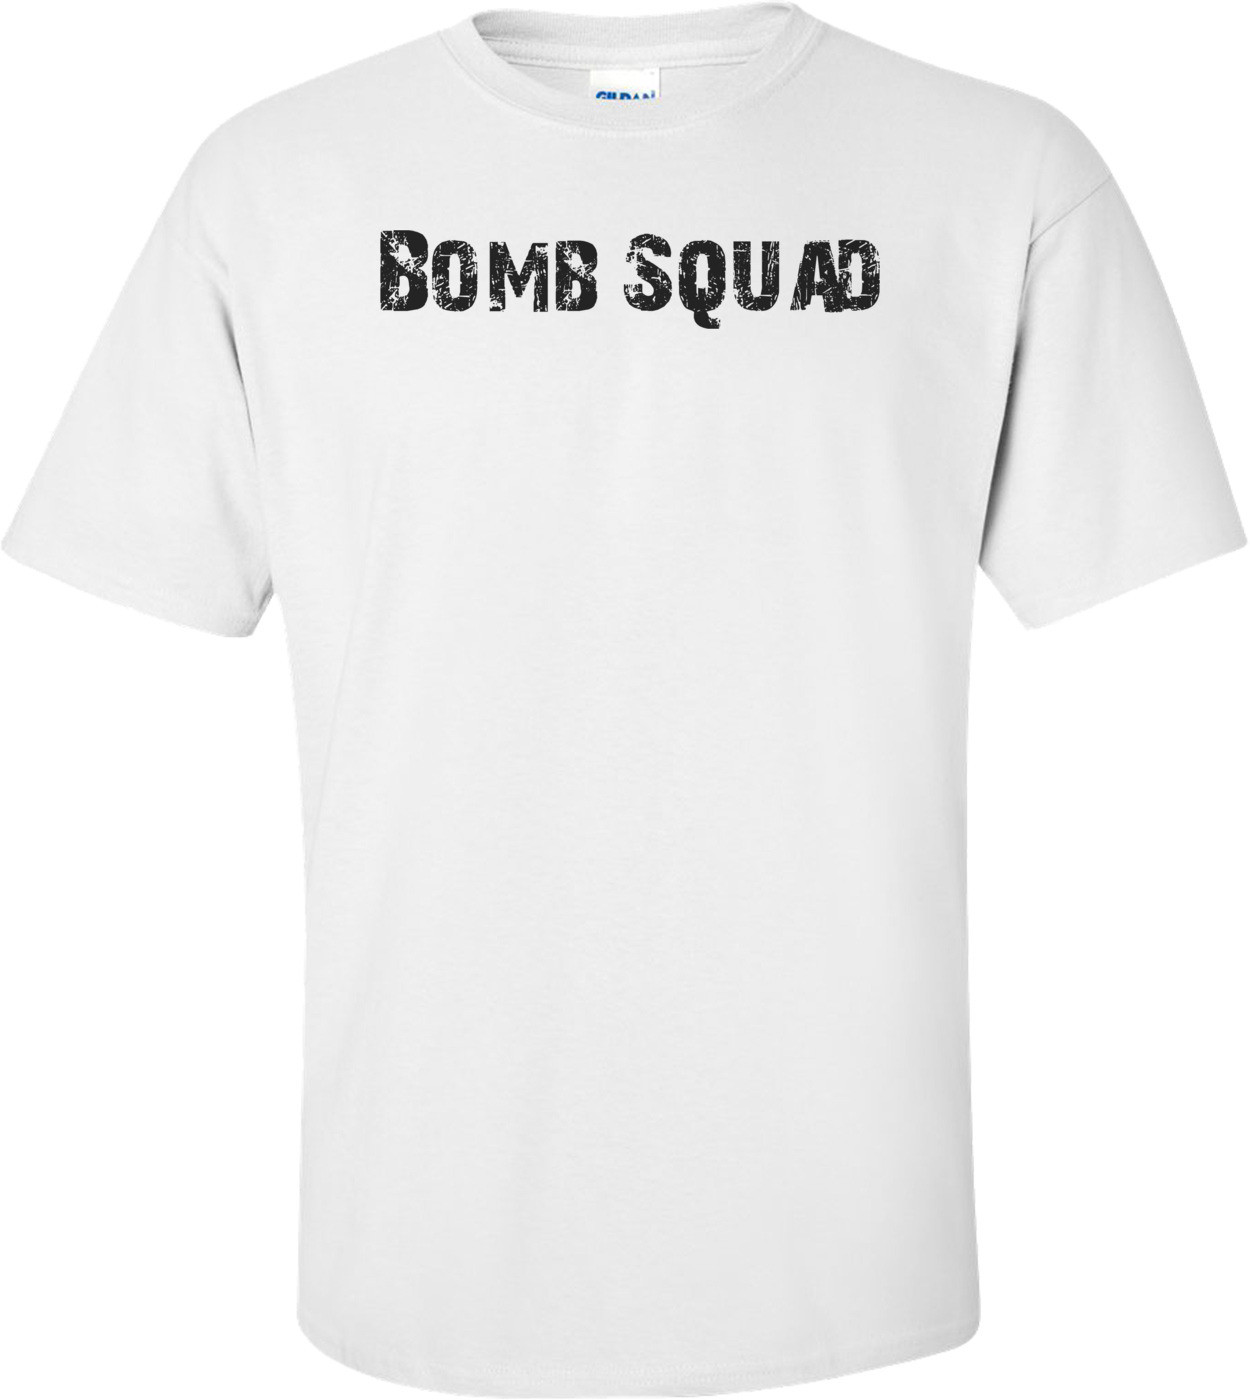 Bomb Squad T-Shirt